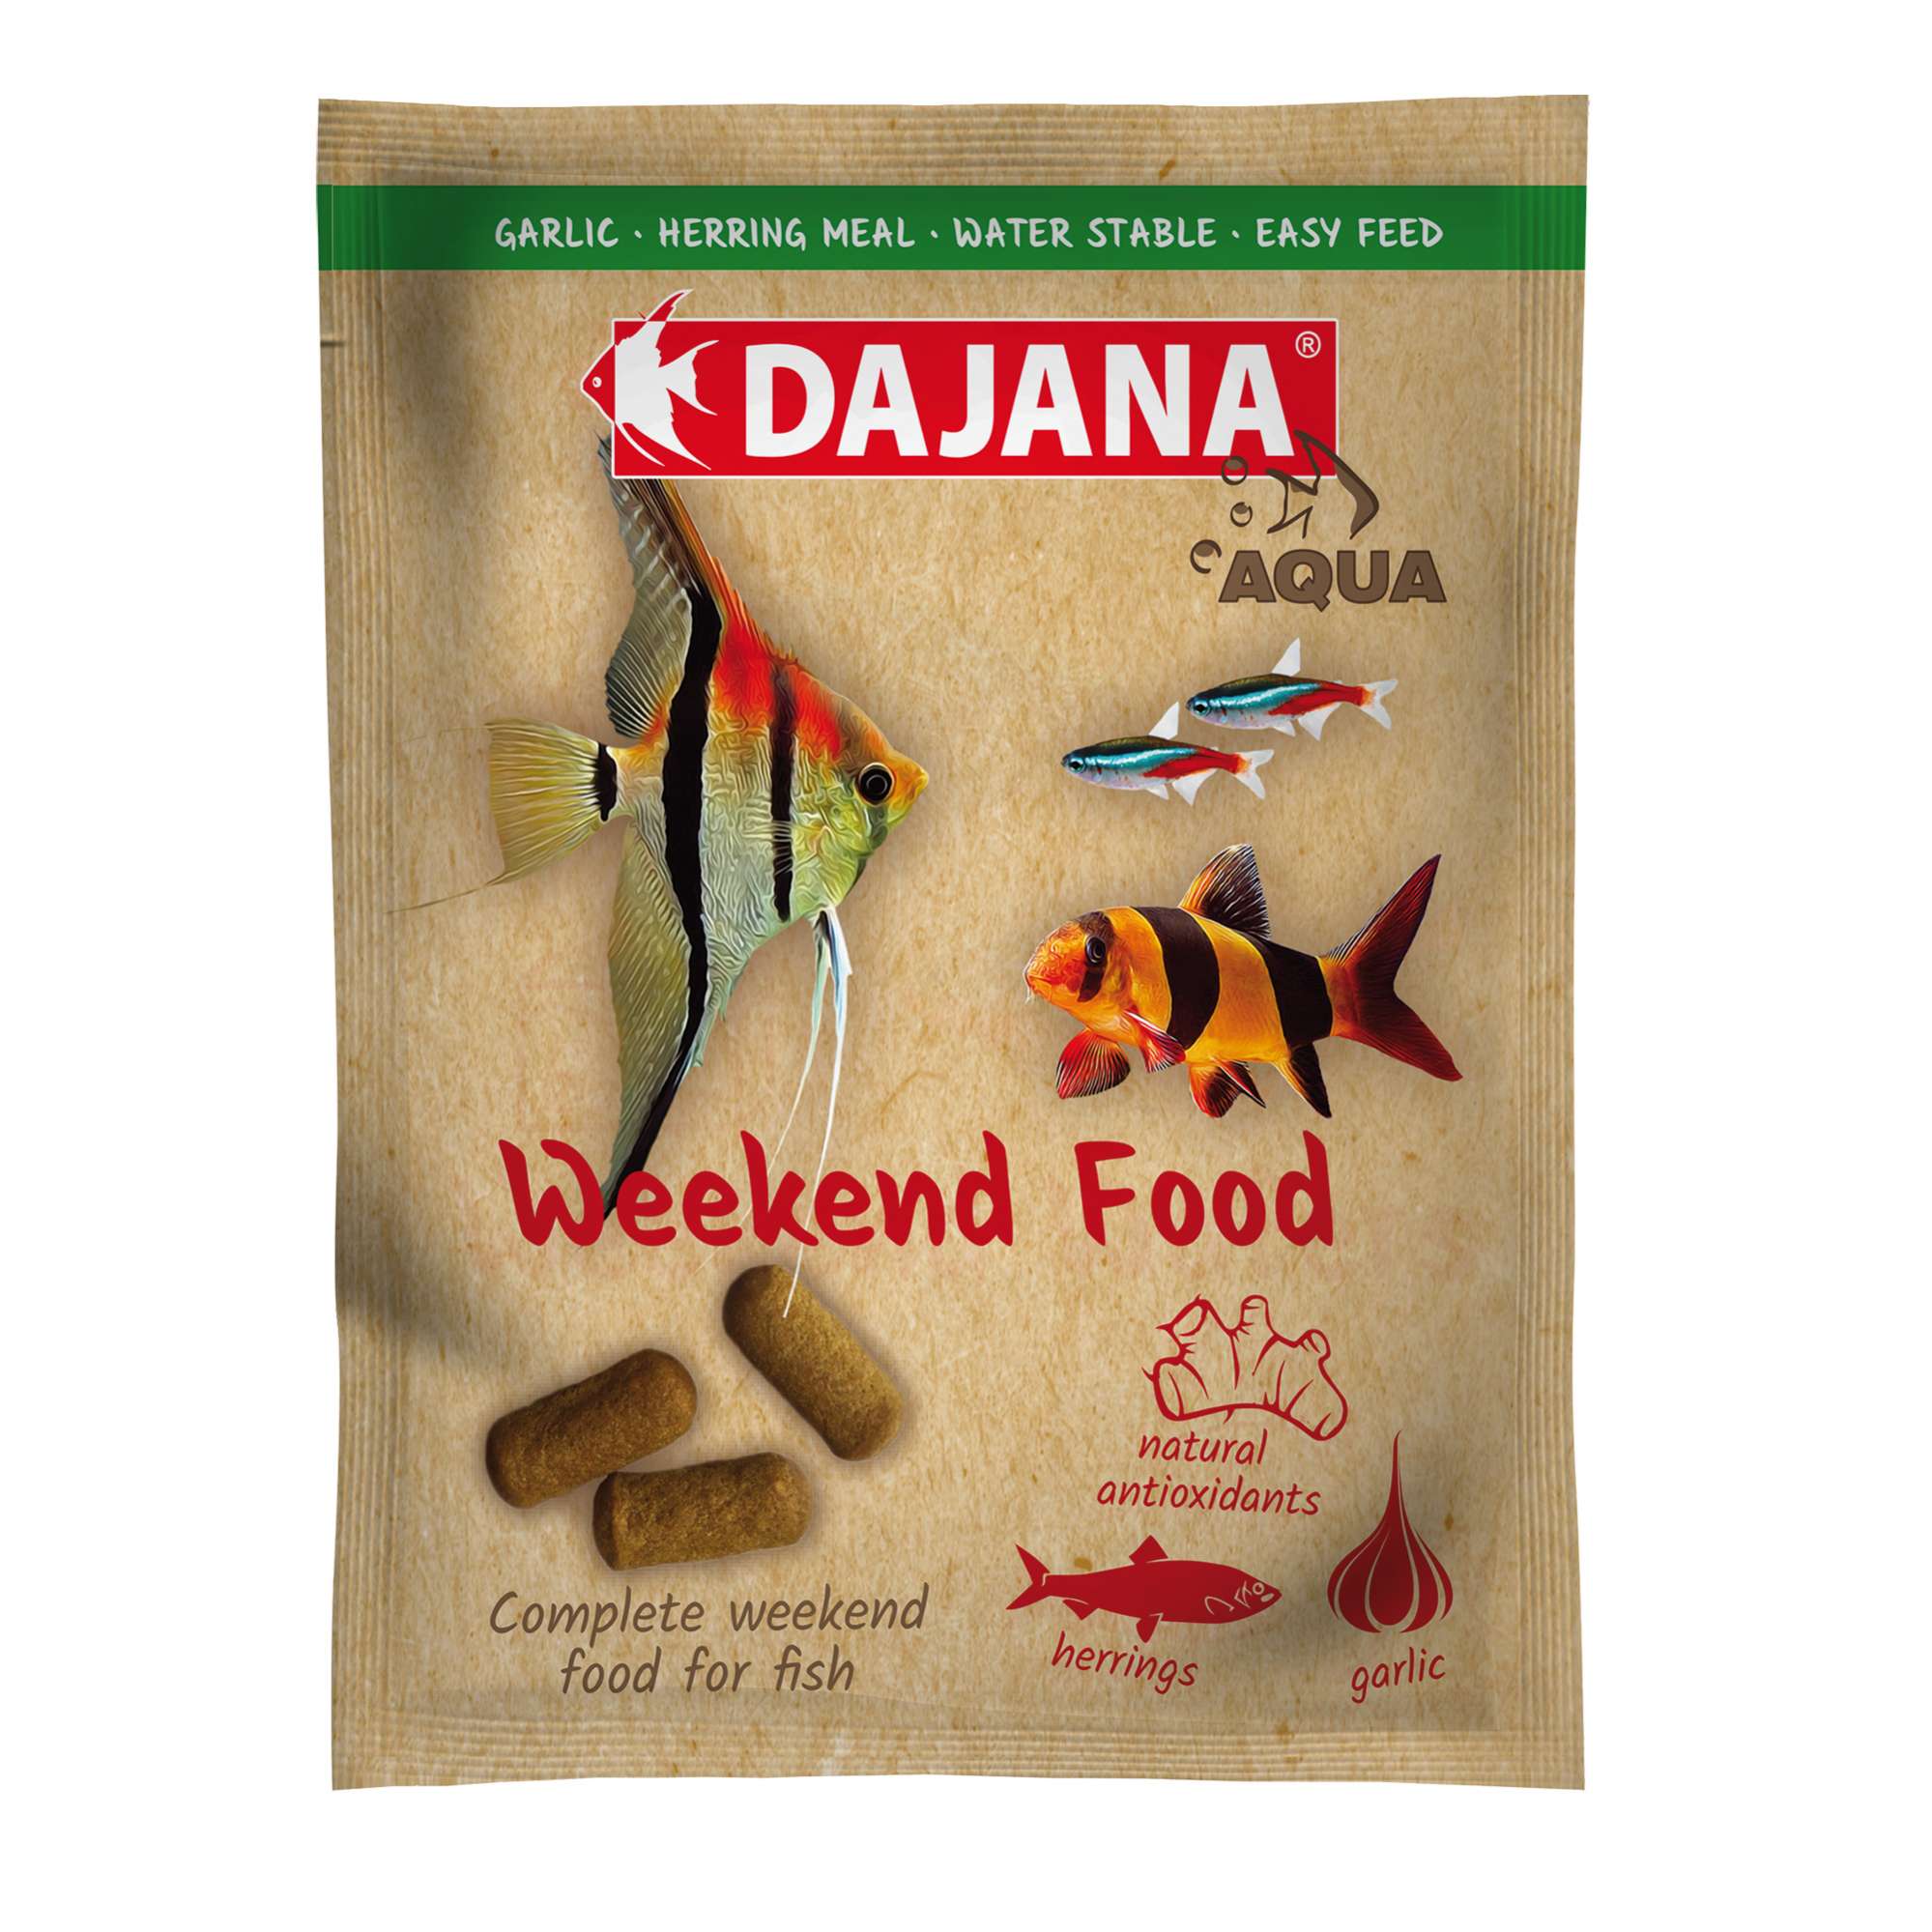 dj13-weekend-food-stick-de-dajana_general_8460